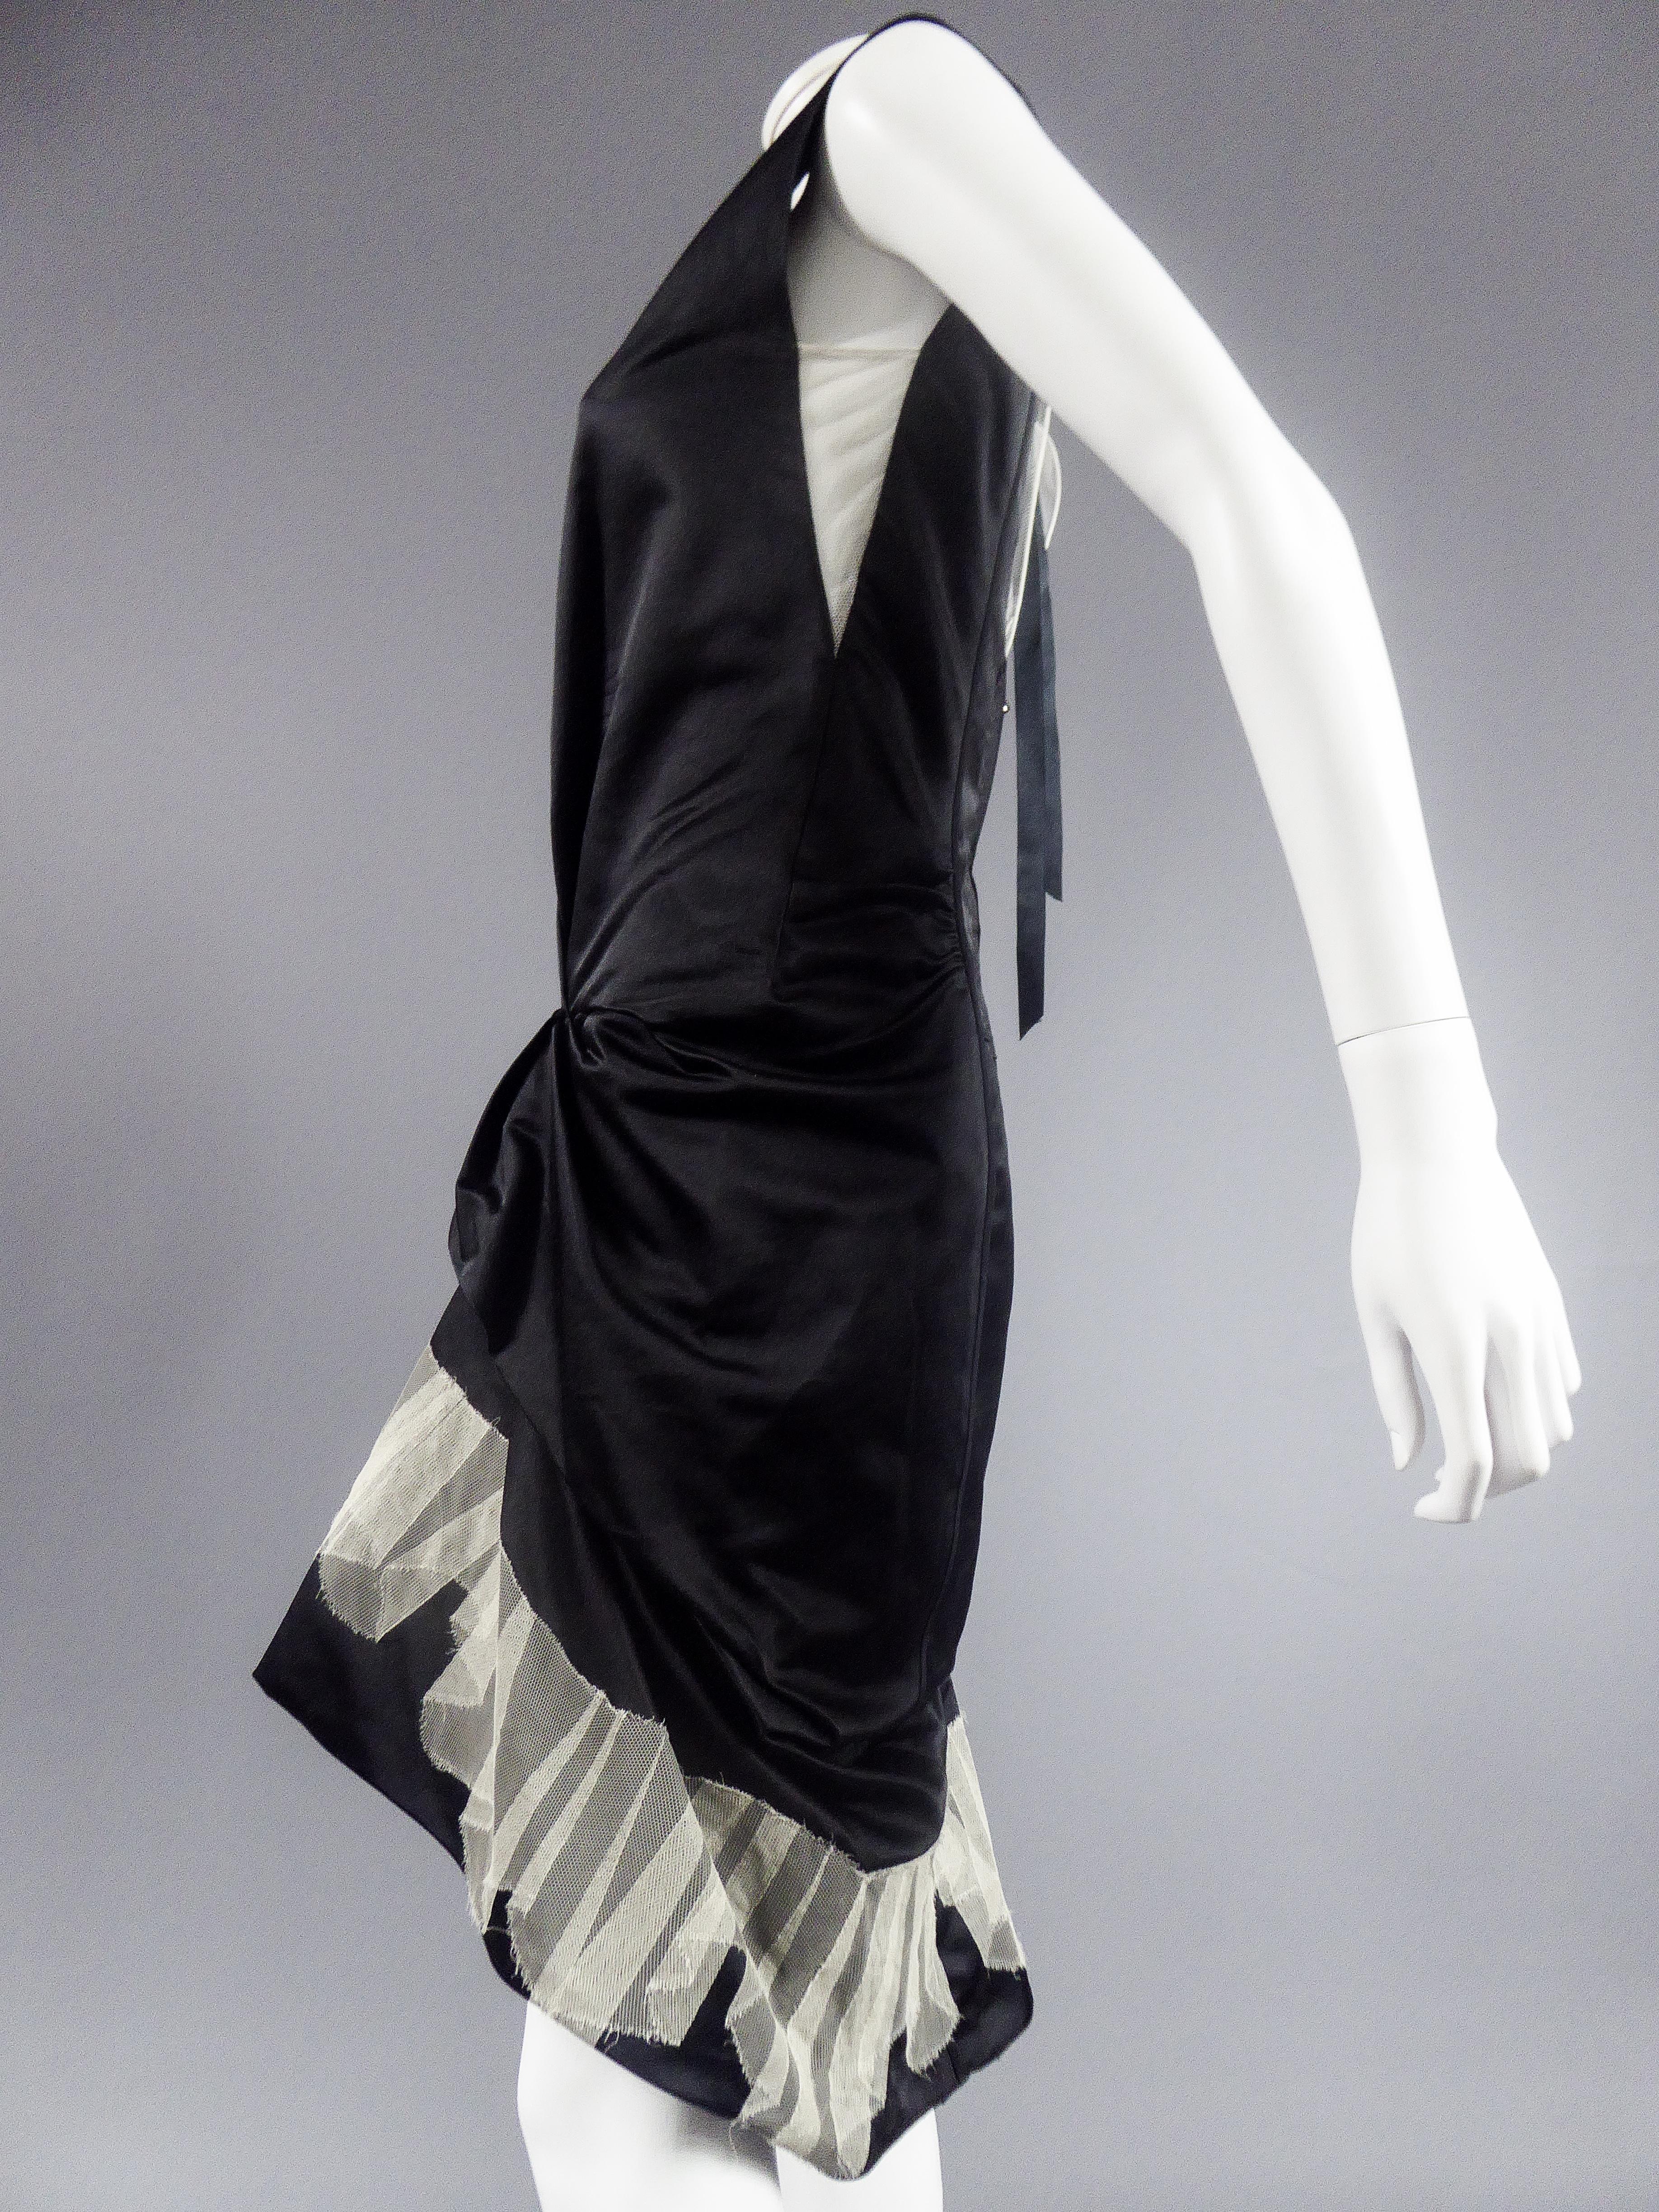 Marc Jacobs black waxed satin Dress, circa 2000 For Sale 4